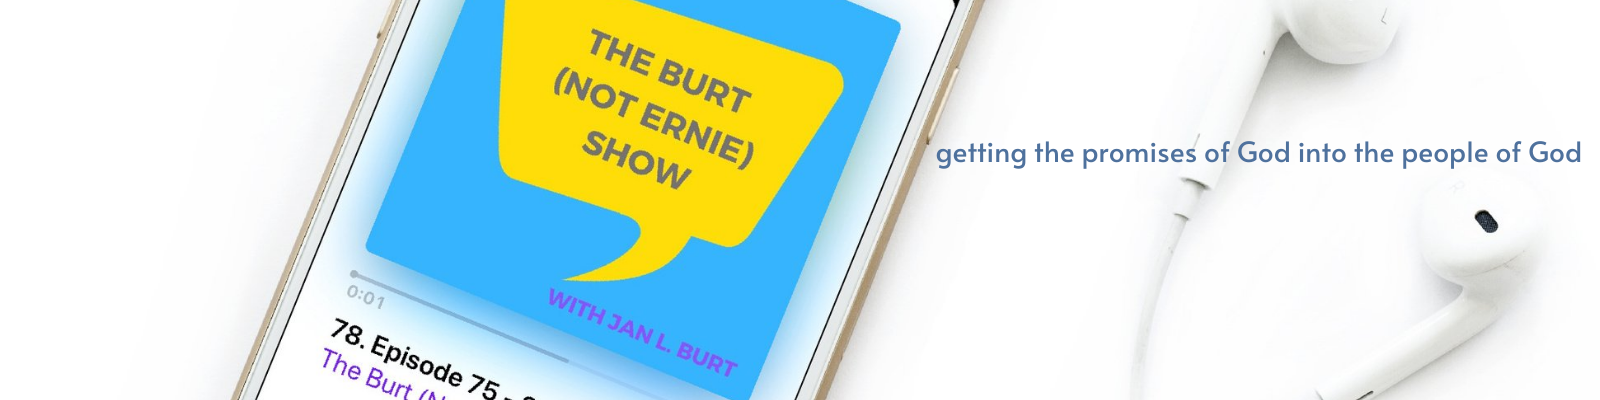 The Burt (Not Ernie) Show